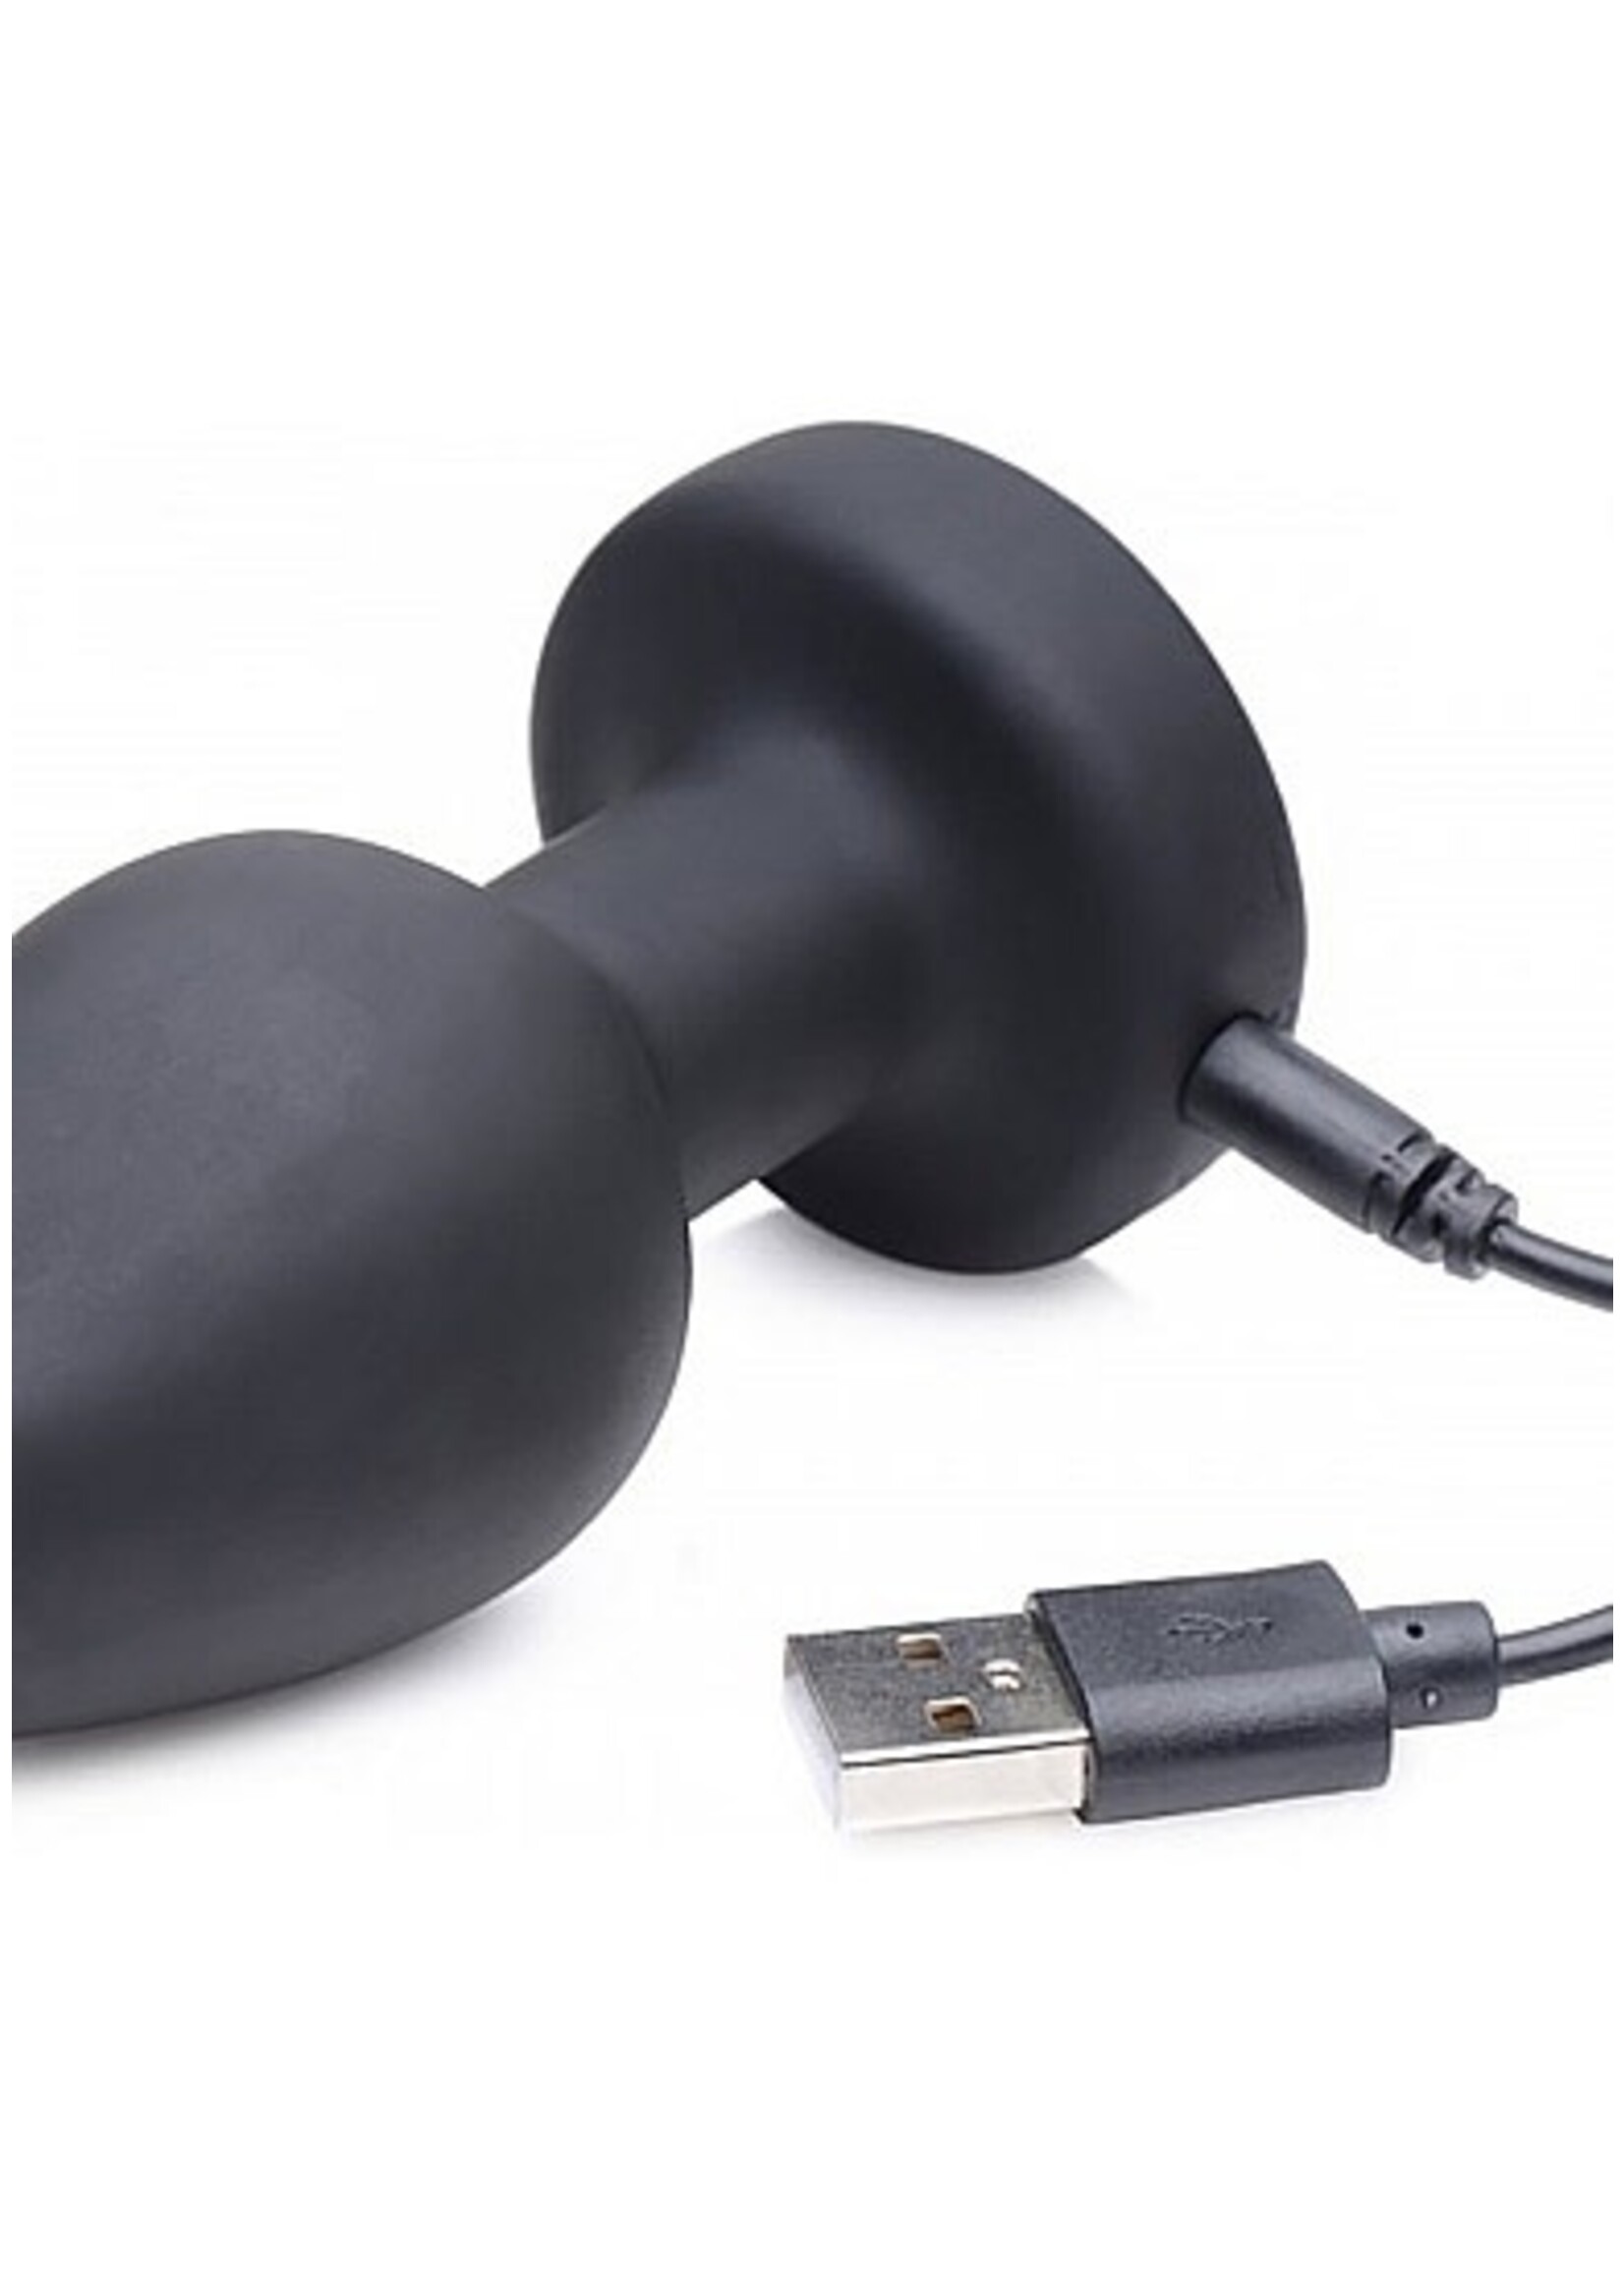 XR Brands E-Stim pro - silicone vibrating anal plug + remote control